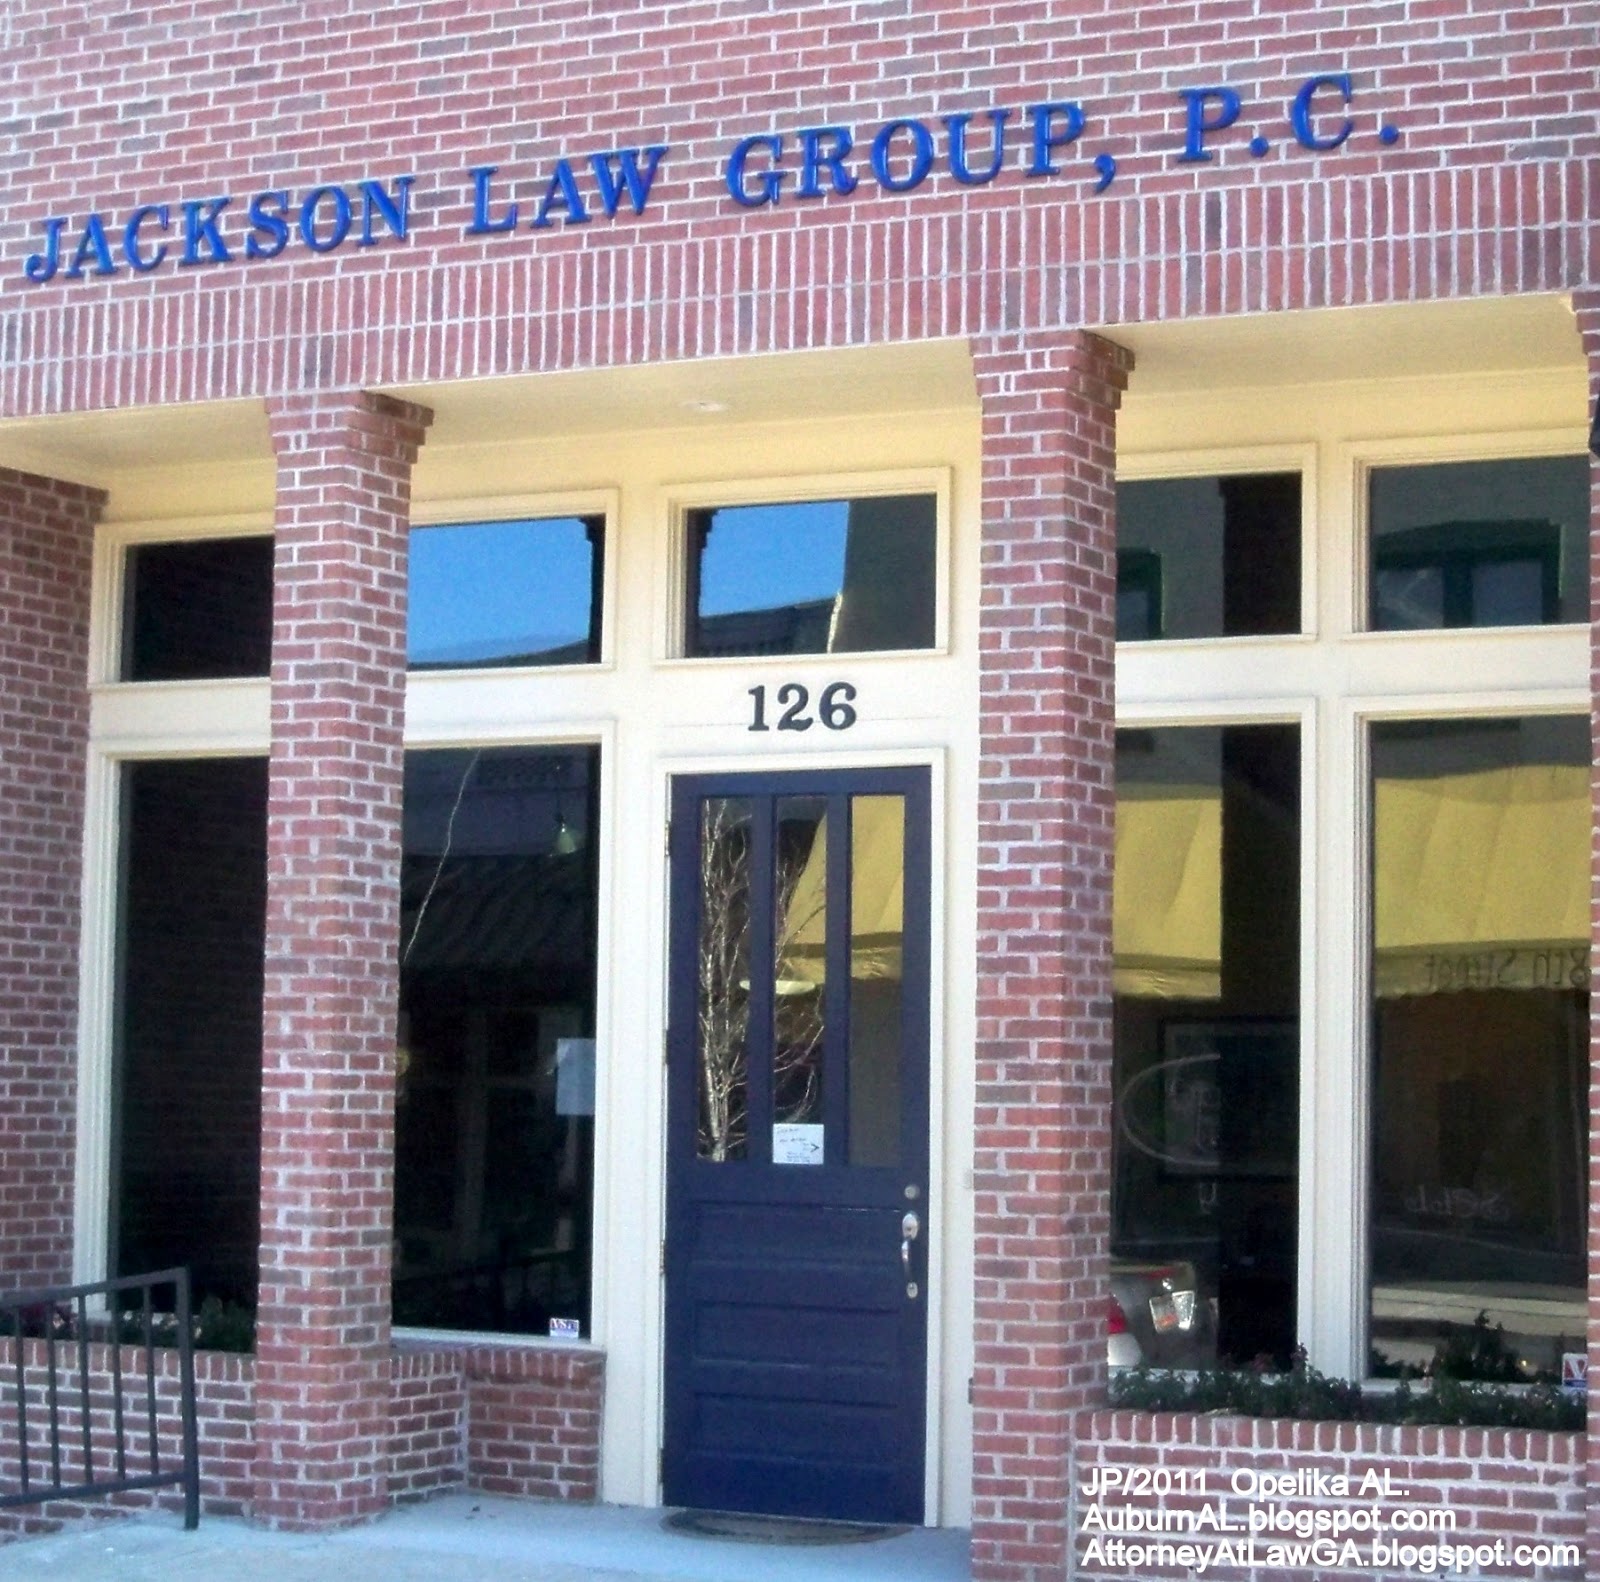 http://3.bp.blogspot.com/-83CUzCG7nOE/T-RvV3RZEbI/AAAAAAAFQoQ/CD0Z9R-xWYw/s1600/JACKSON+LAW+GROUP+PC.+OPELIKA+ALABAMA,Jackson+Law+Group+Attorneys+At+Law+Lawyer+Offices+Lee+County+AL..JPG